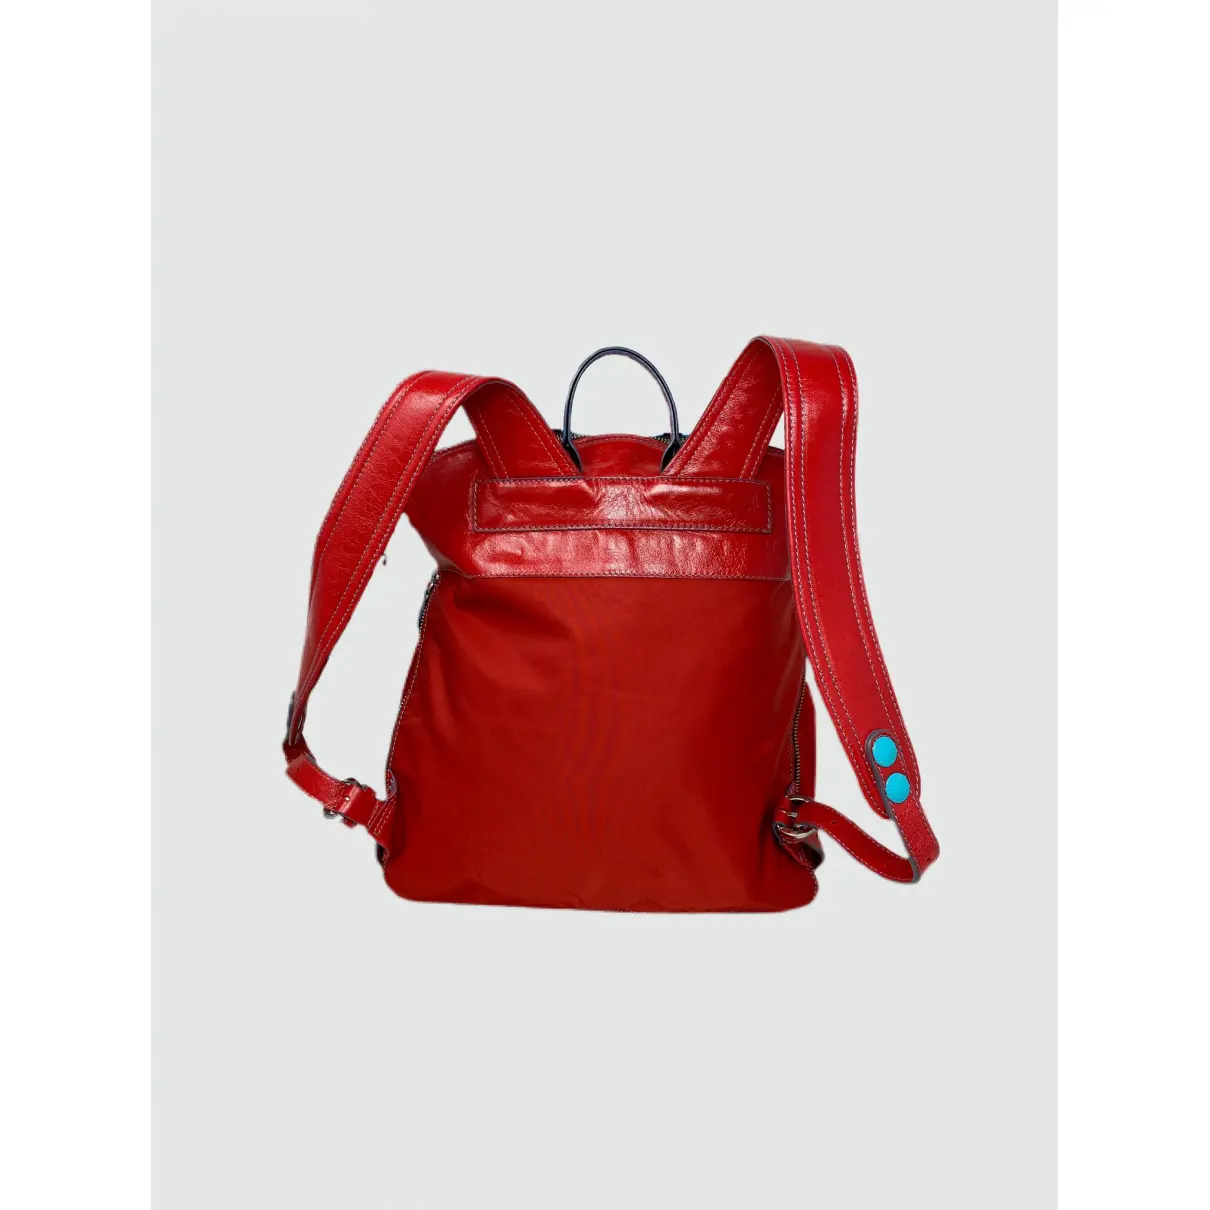 Buy GABS  Leather backpack online